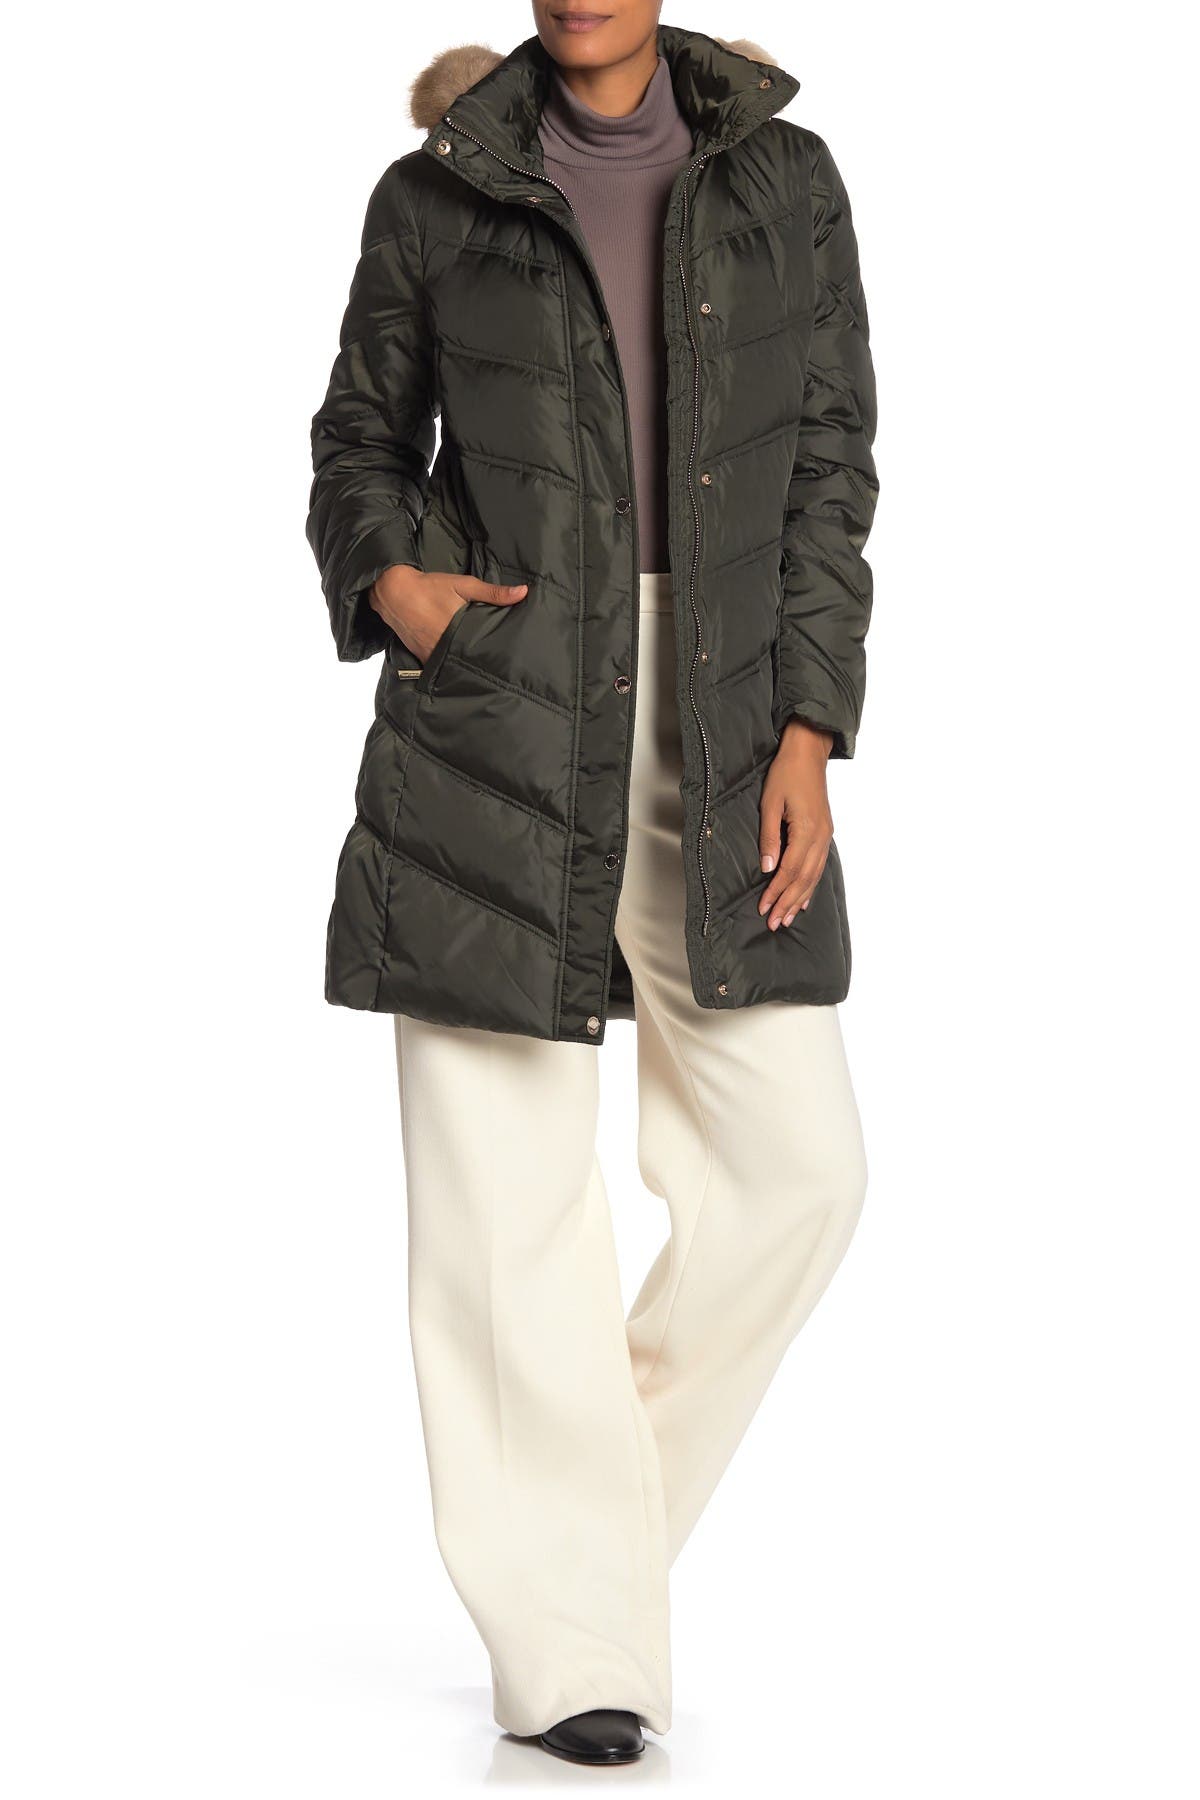 michael kors missy front zip faux fur collared jacket